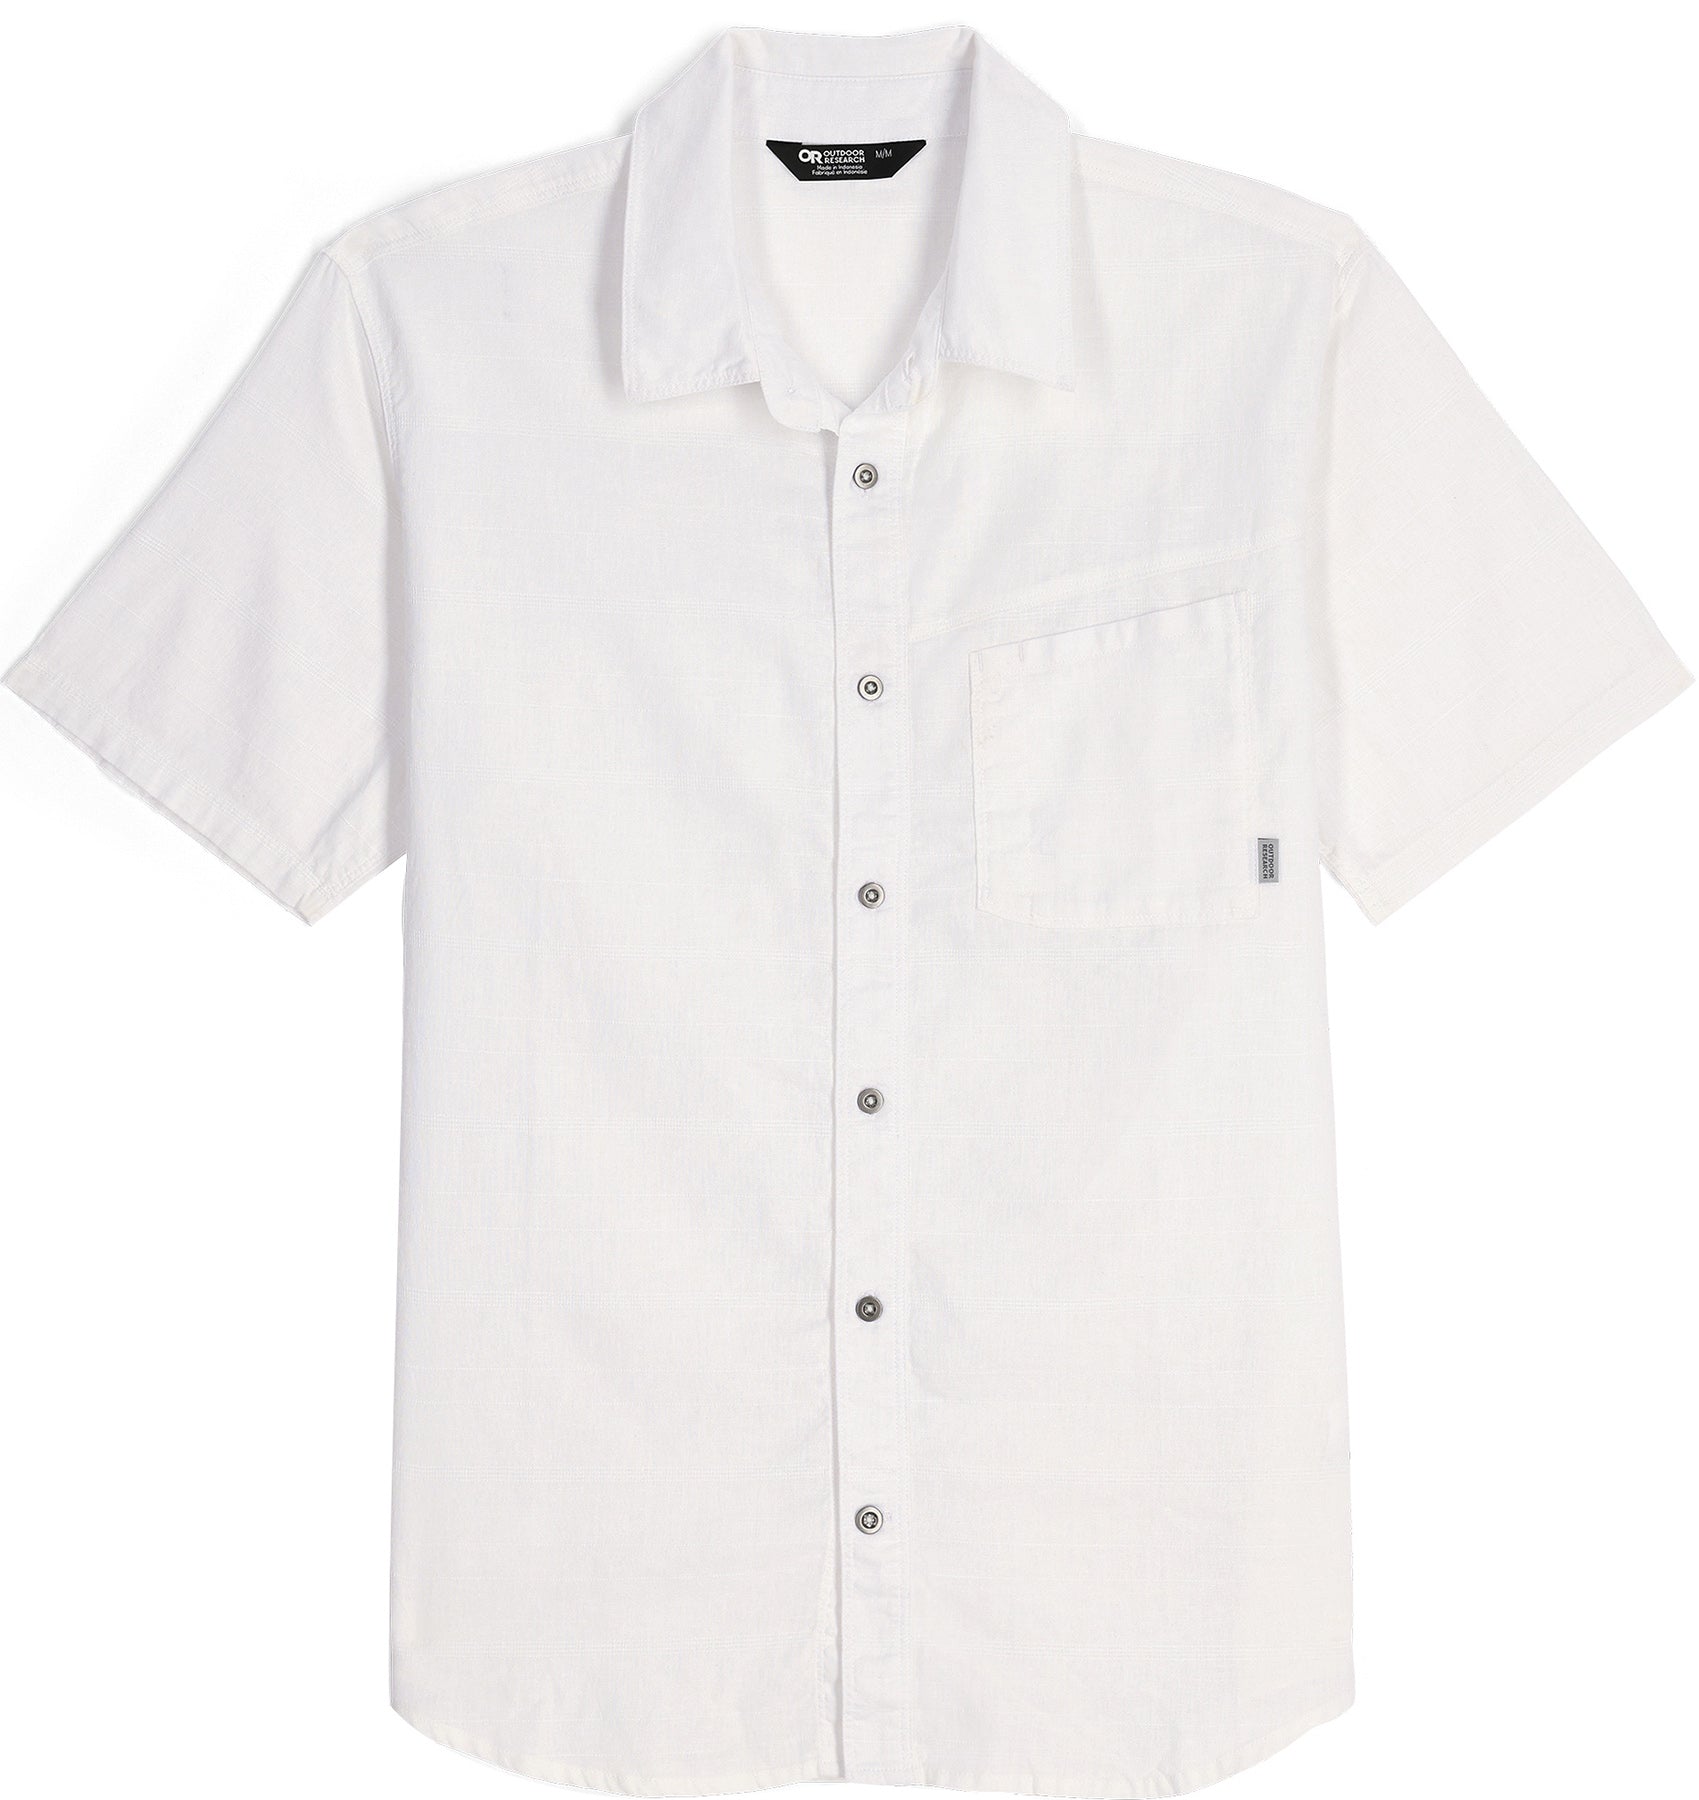 Outdoor Research Men's Weisse Shirt White / XL